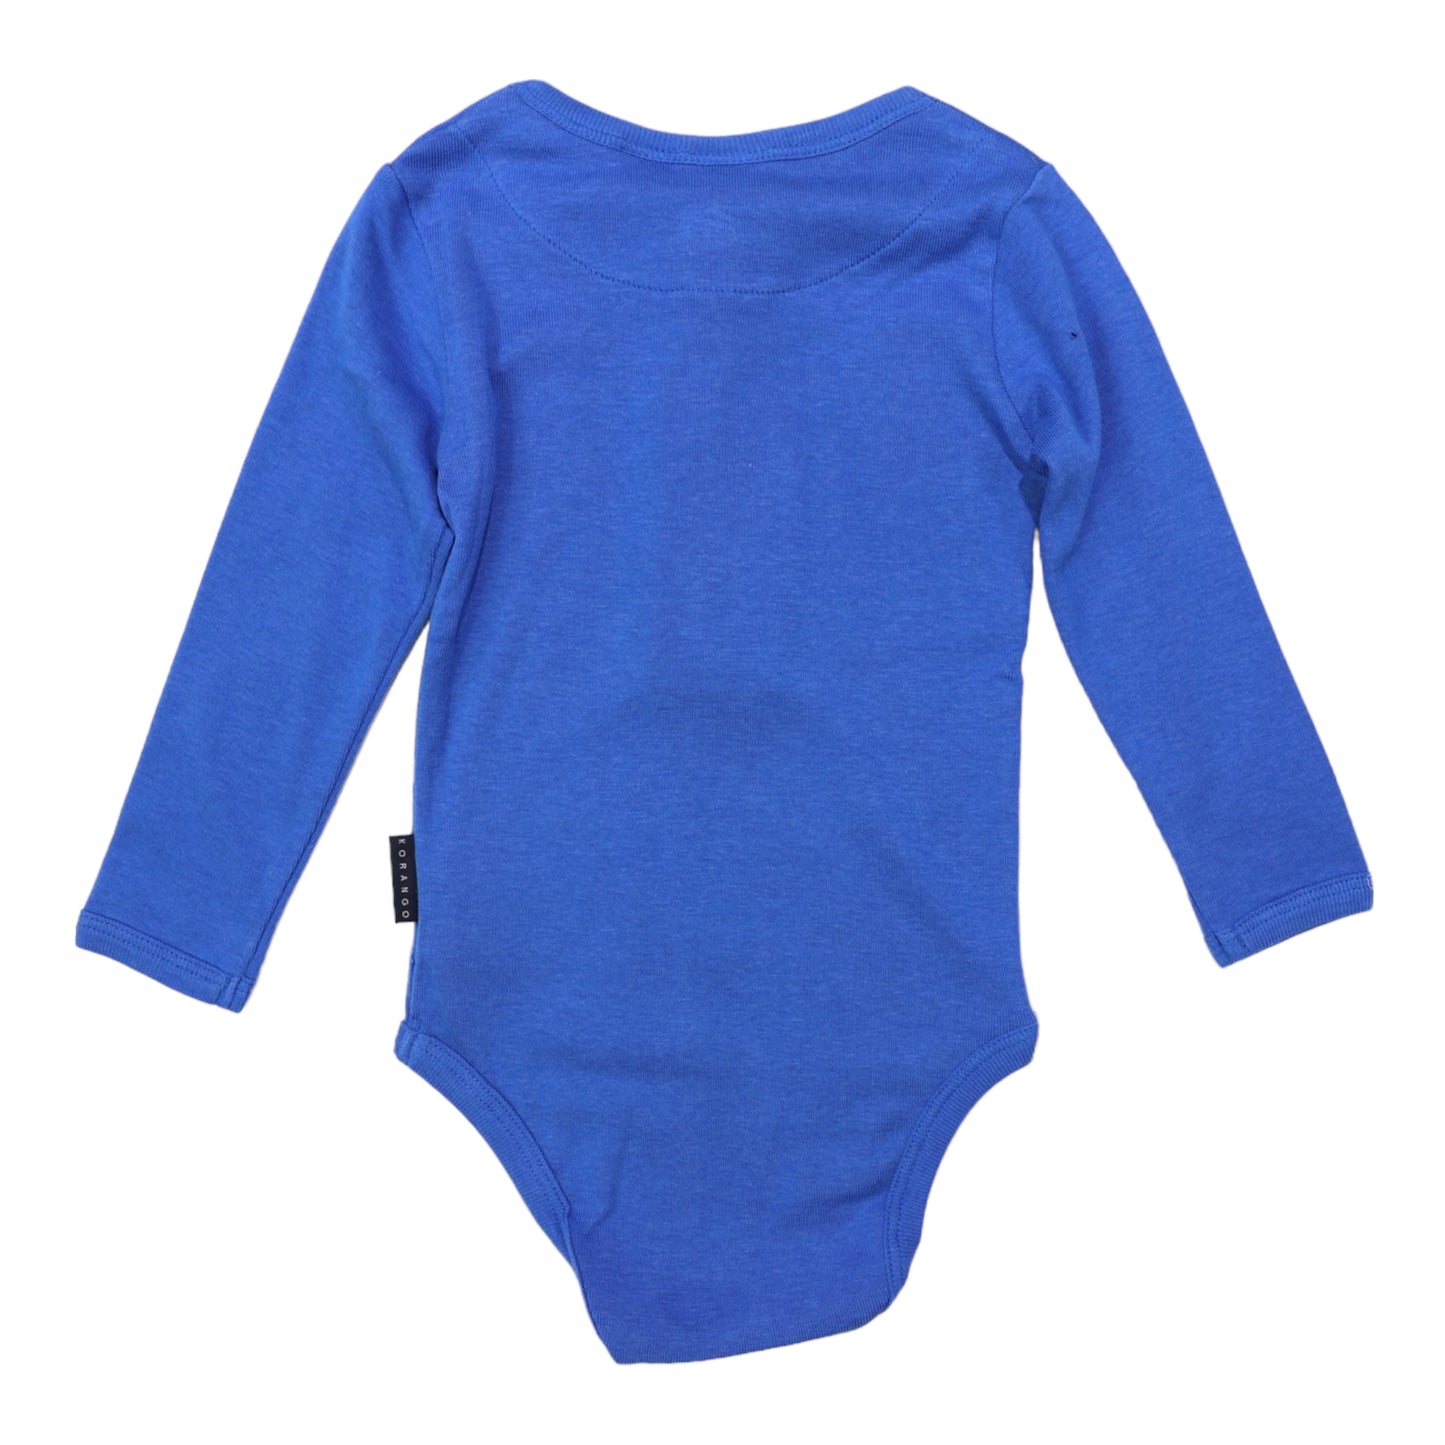 Korango | Cotton Modal Henley Bodysuit | Victoria Blue, Navy and Dusty Blue